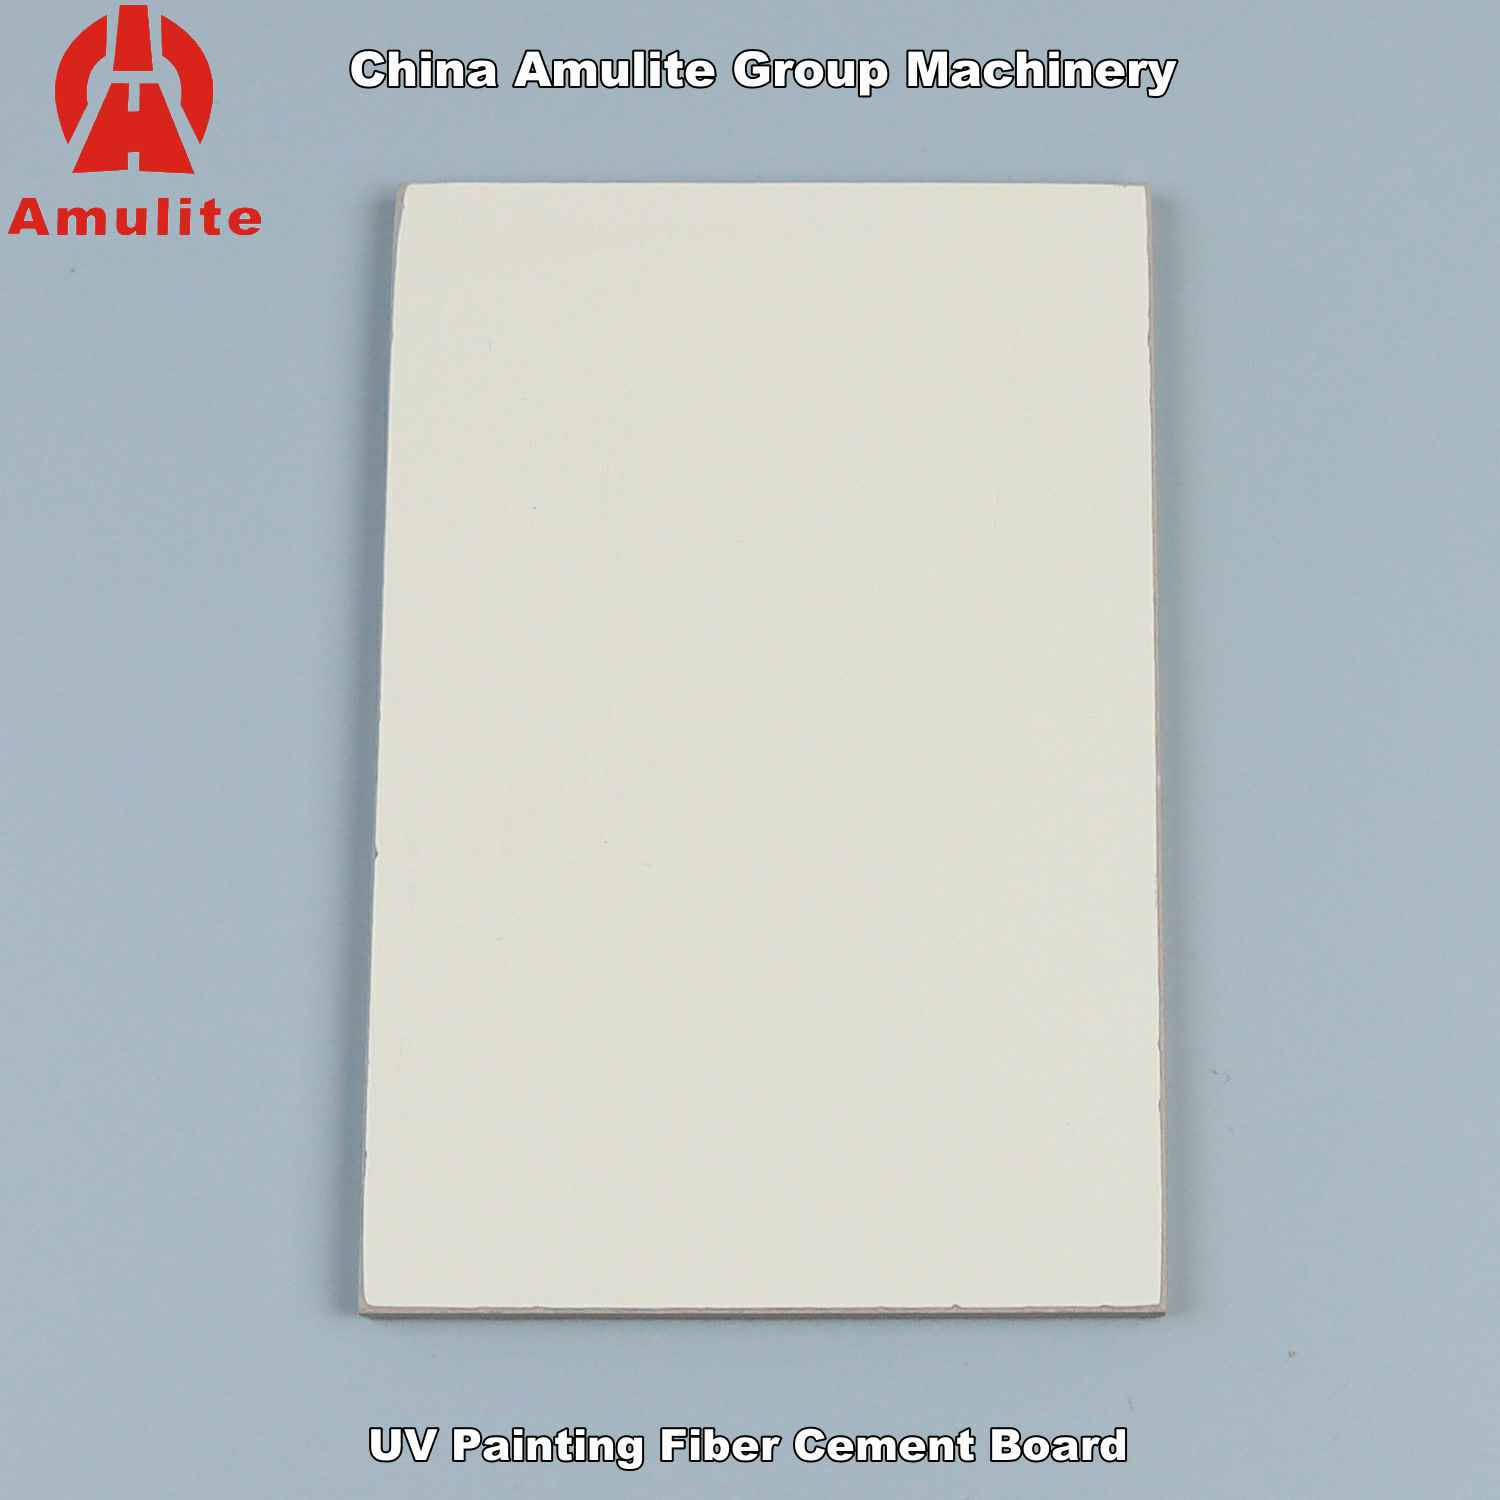 UV Painting Fiber Cement Board (16)